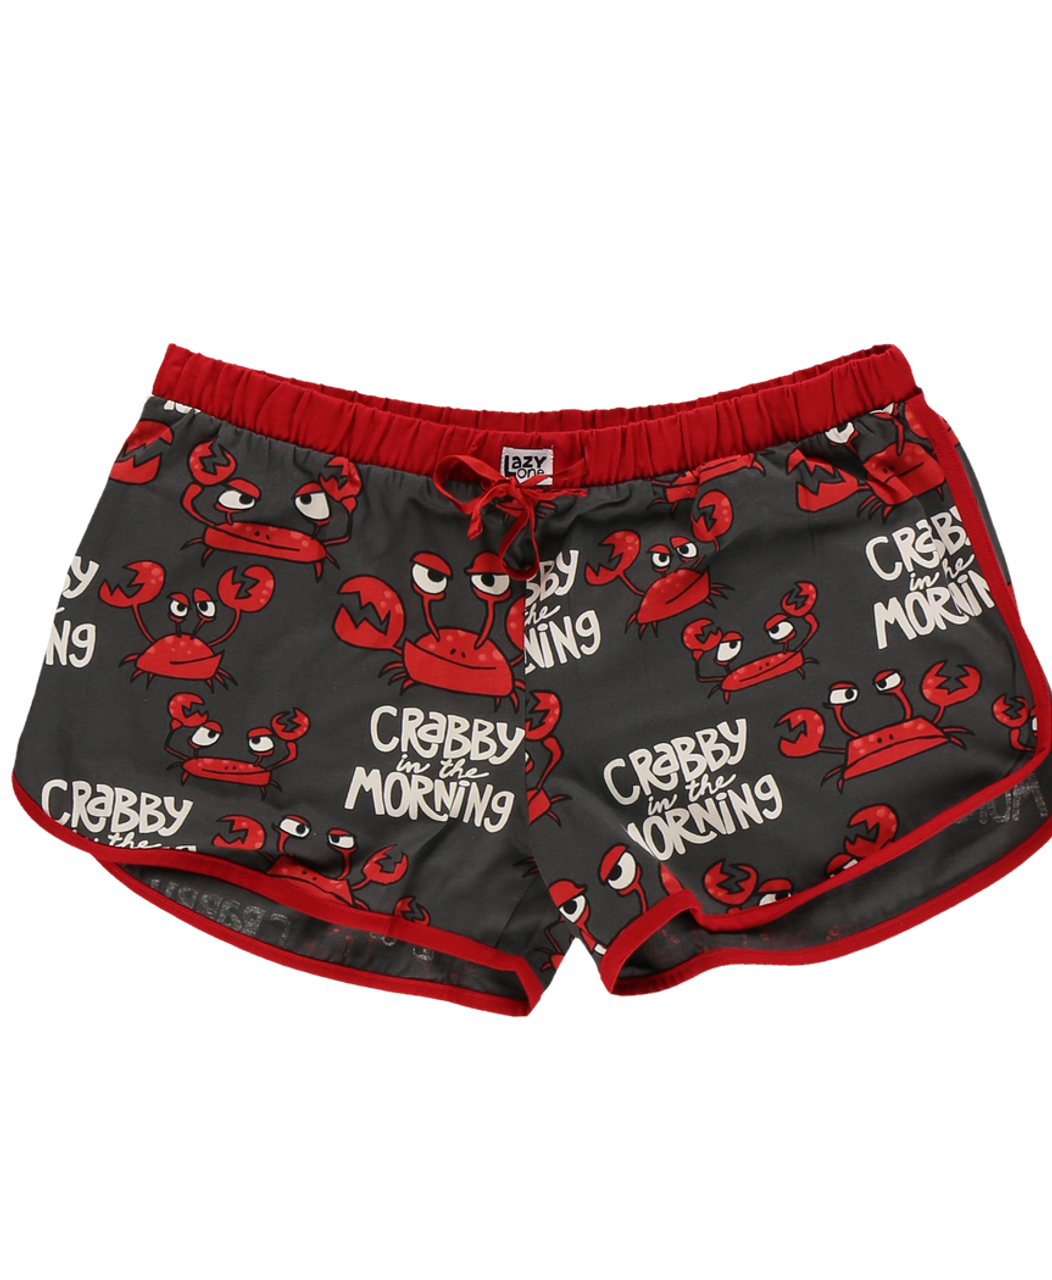 Crabby in the Morning Pajama Sleep Shorts